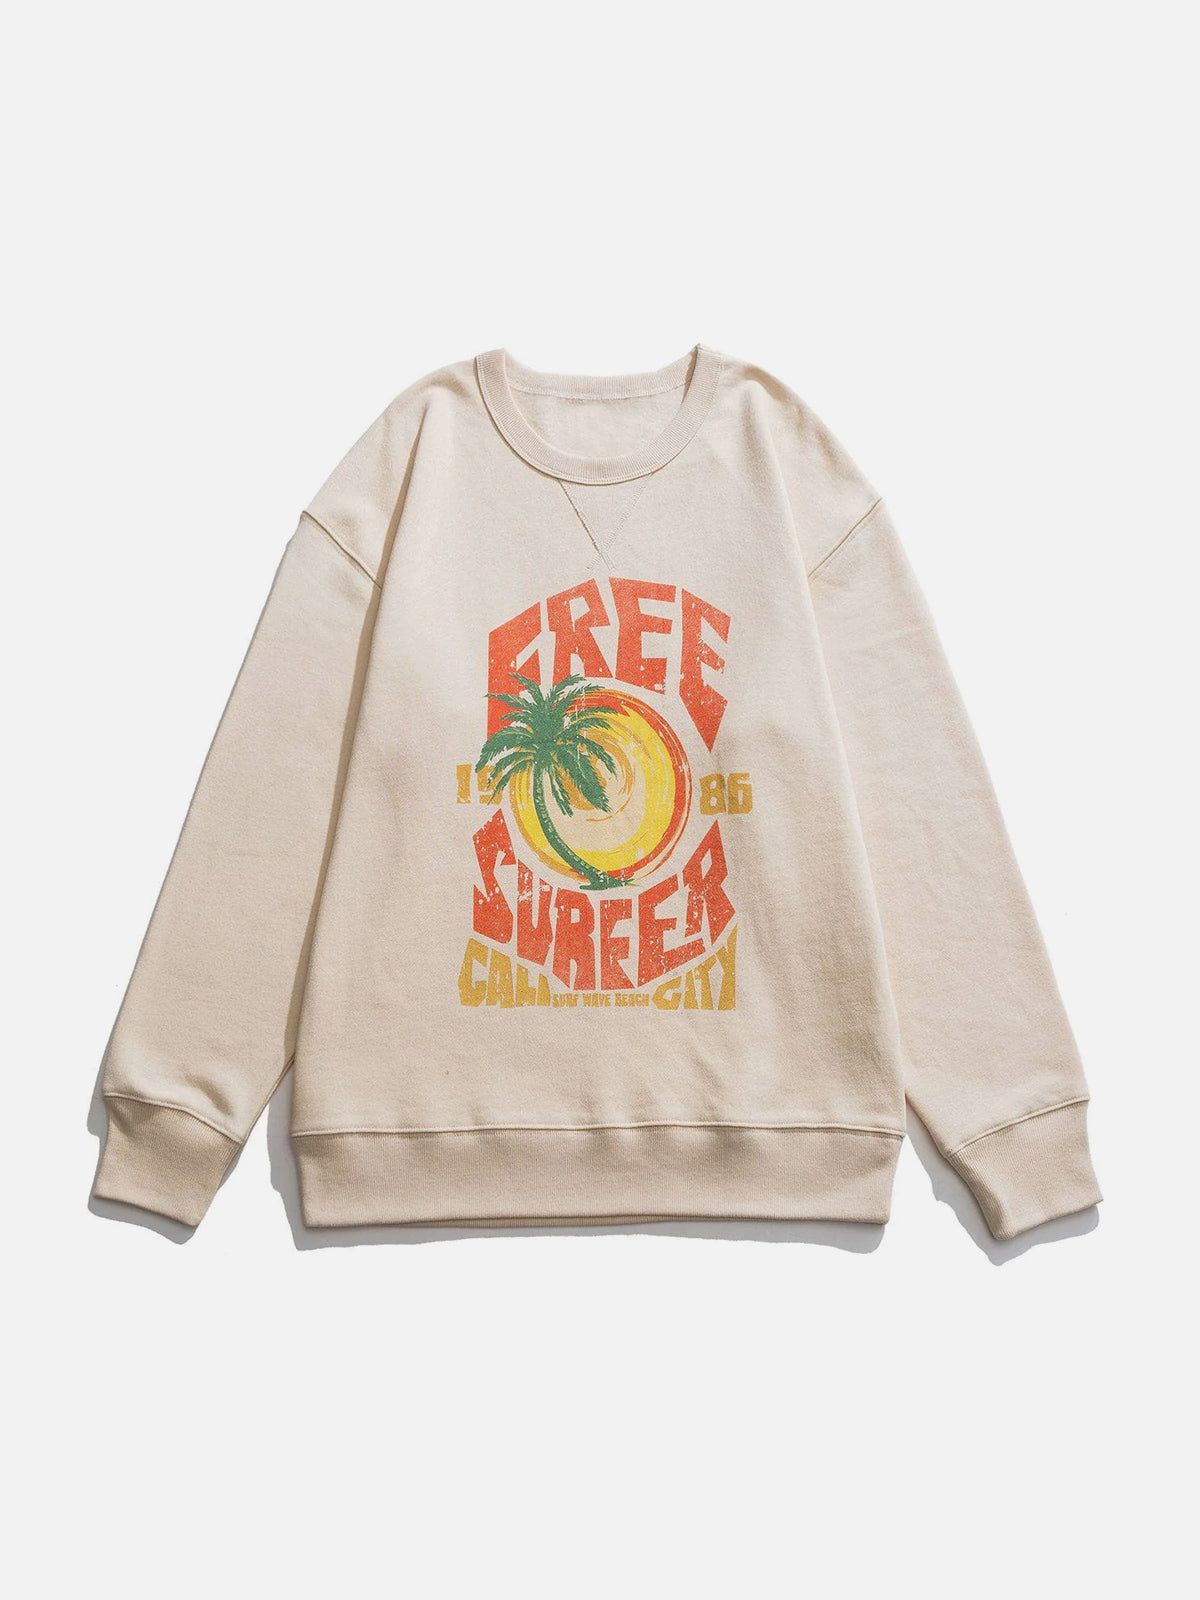 LUXENFY™ - Coconut Tiger Print Sweatshirt luxenfy.com